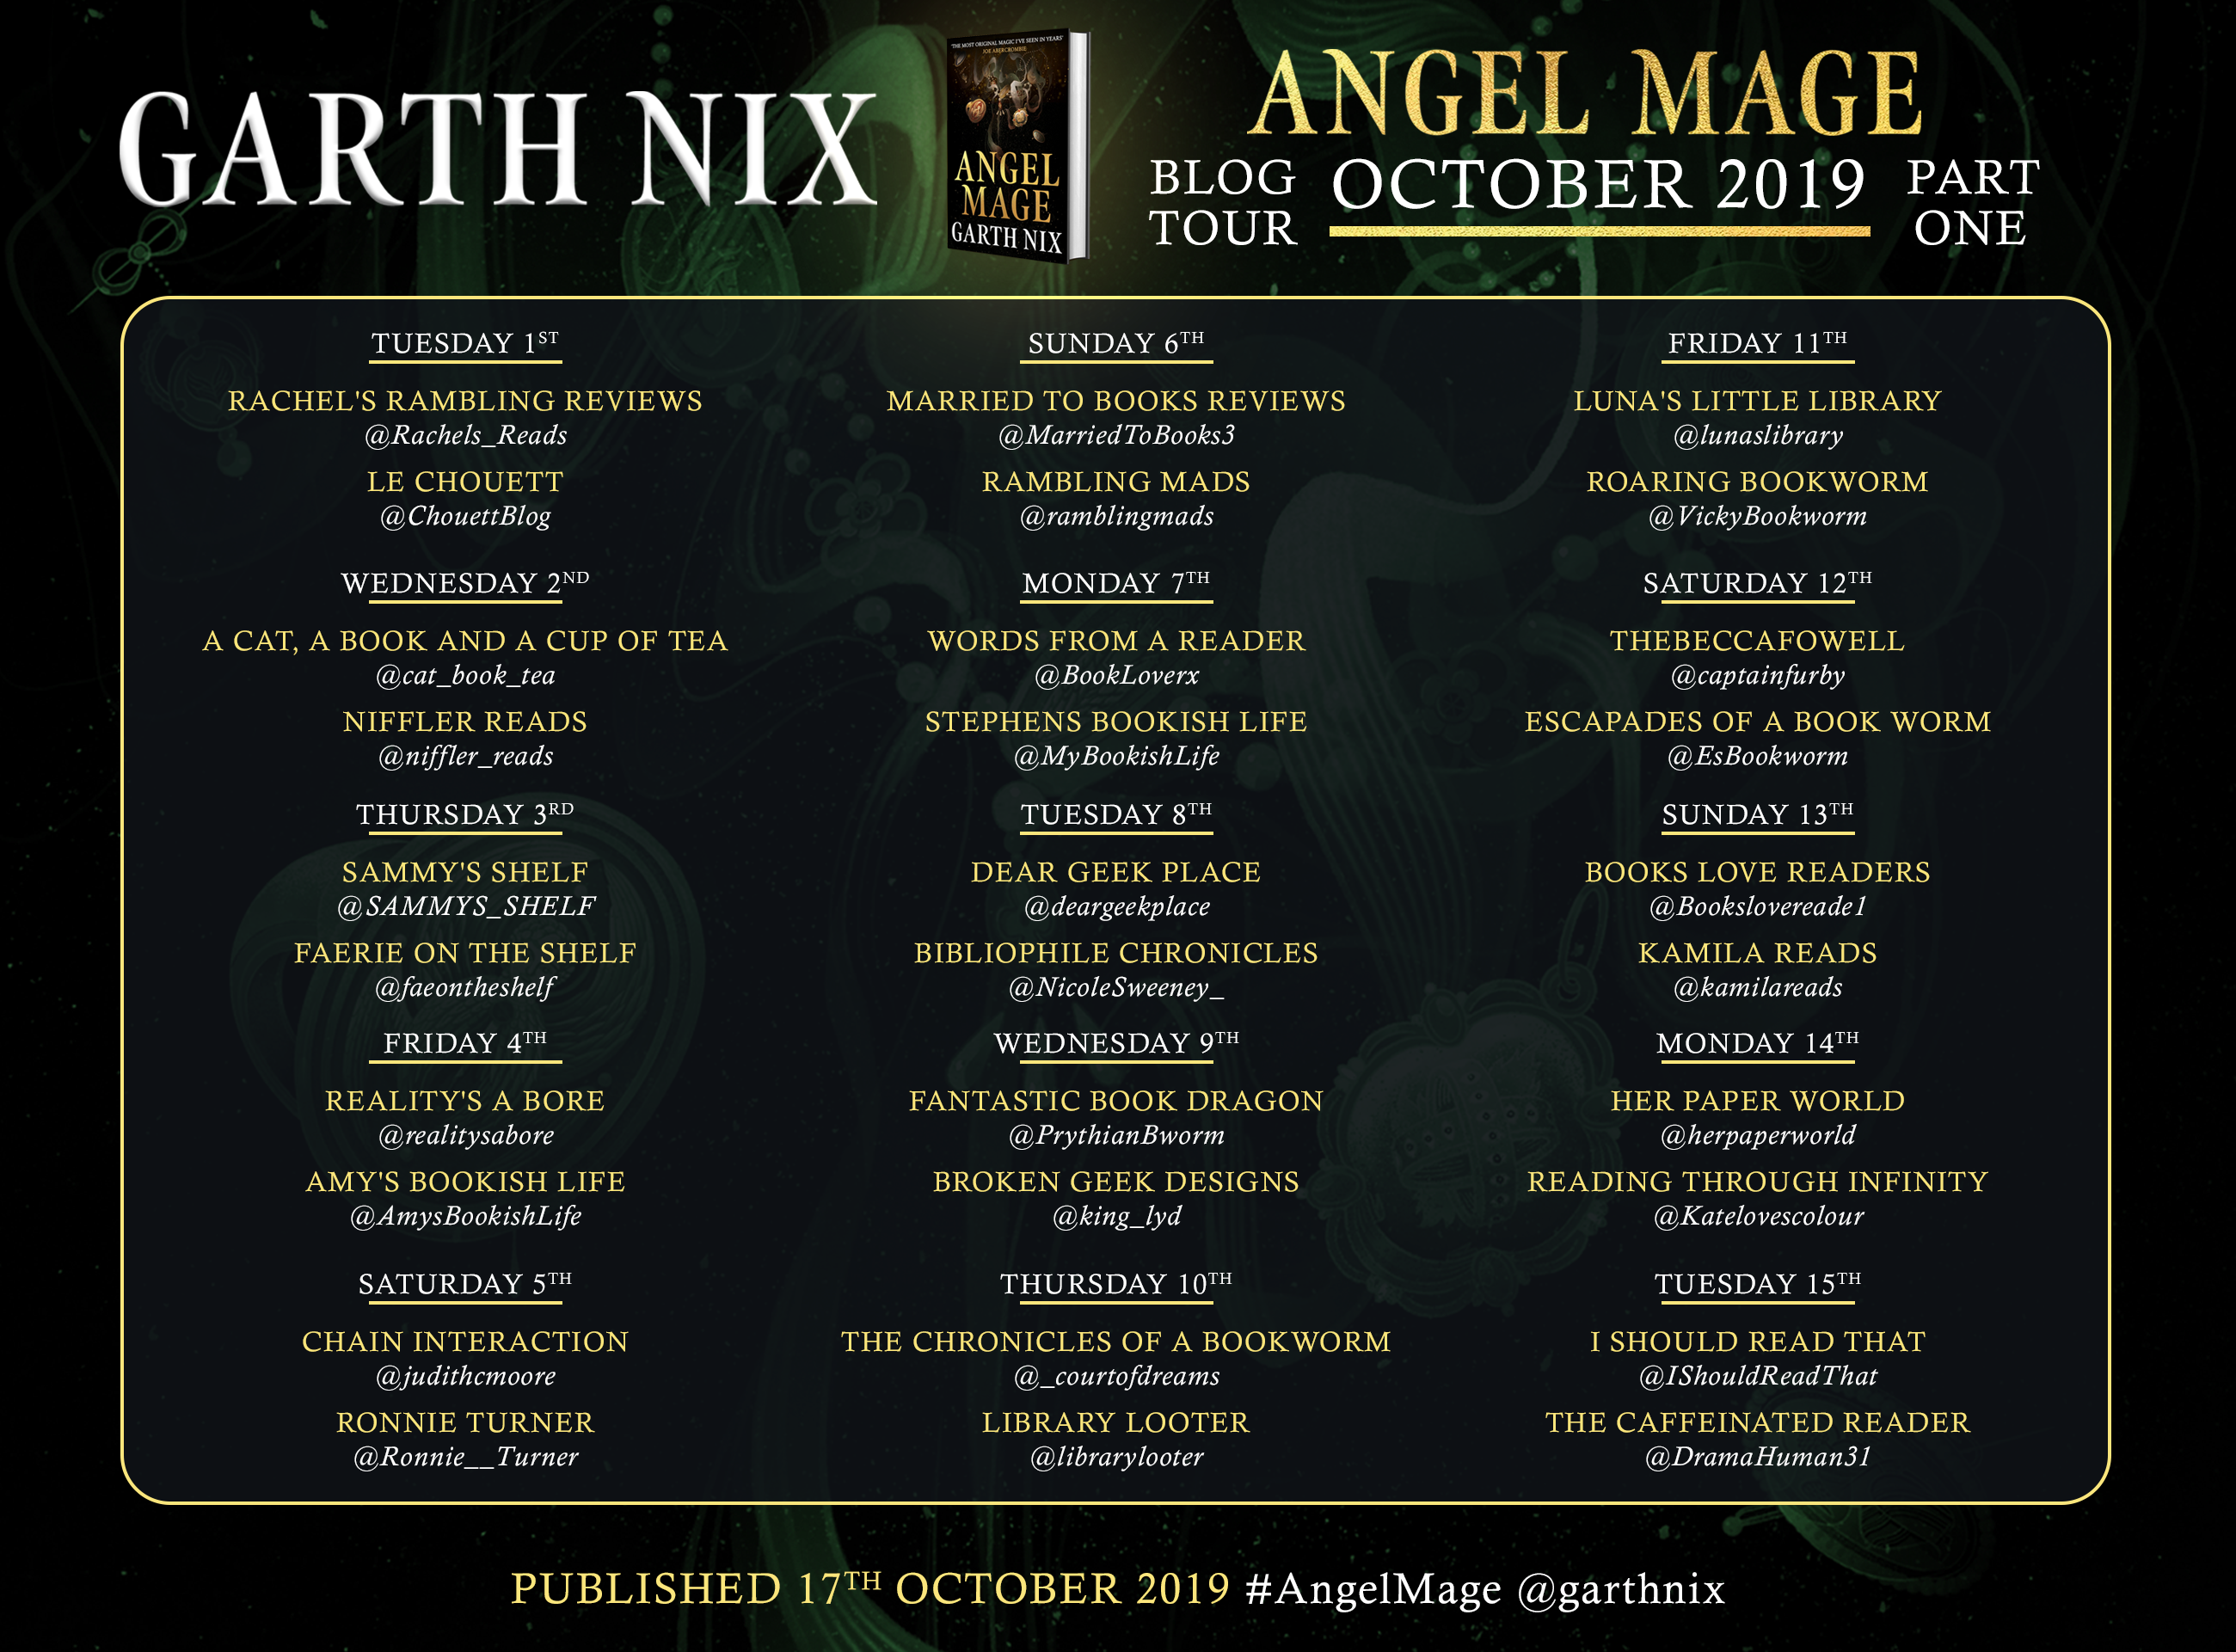 ANGEL MAGE BLOG TOUR PART 1